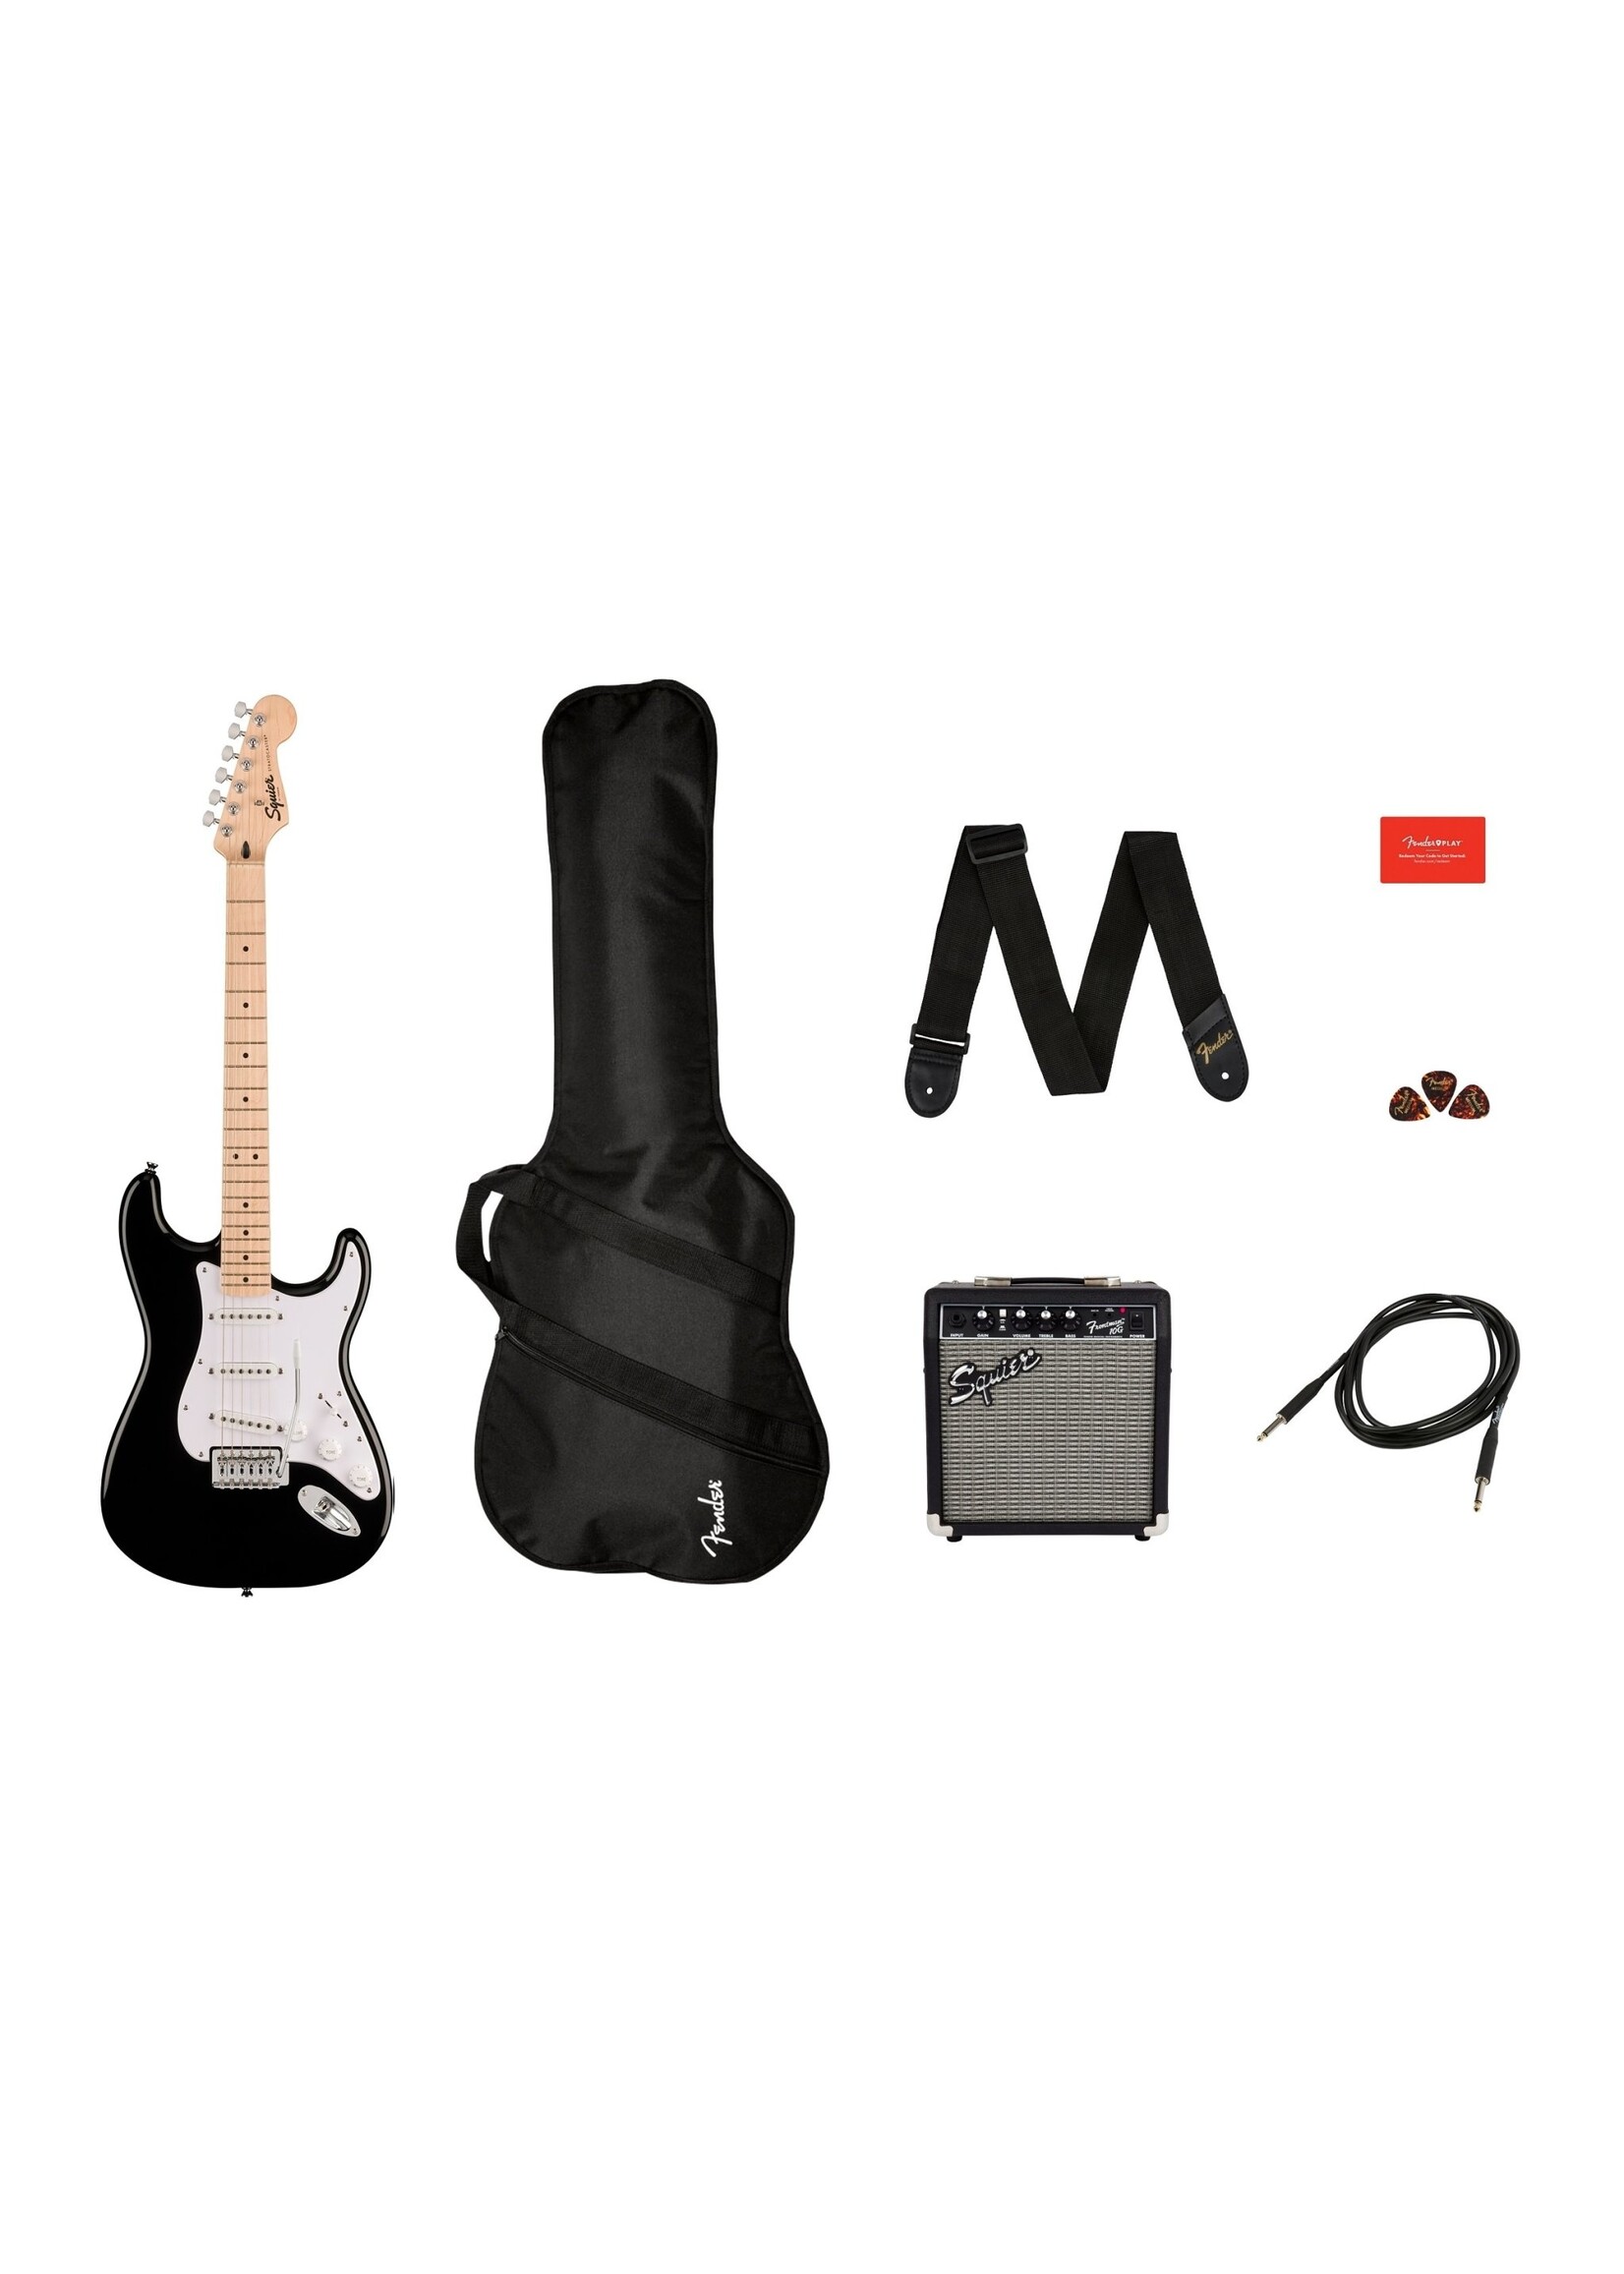 Squier Squier Squier Sonic Stratocaster Pack, Maple Fingerboard, Black, Gig Bag, 10G - 120V